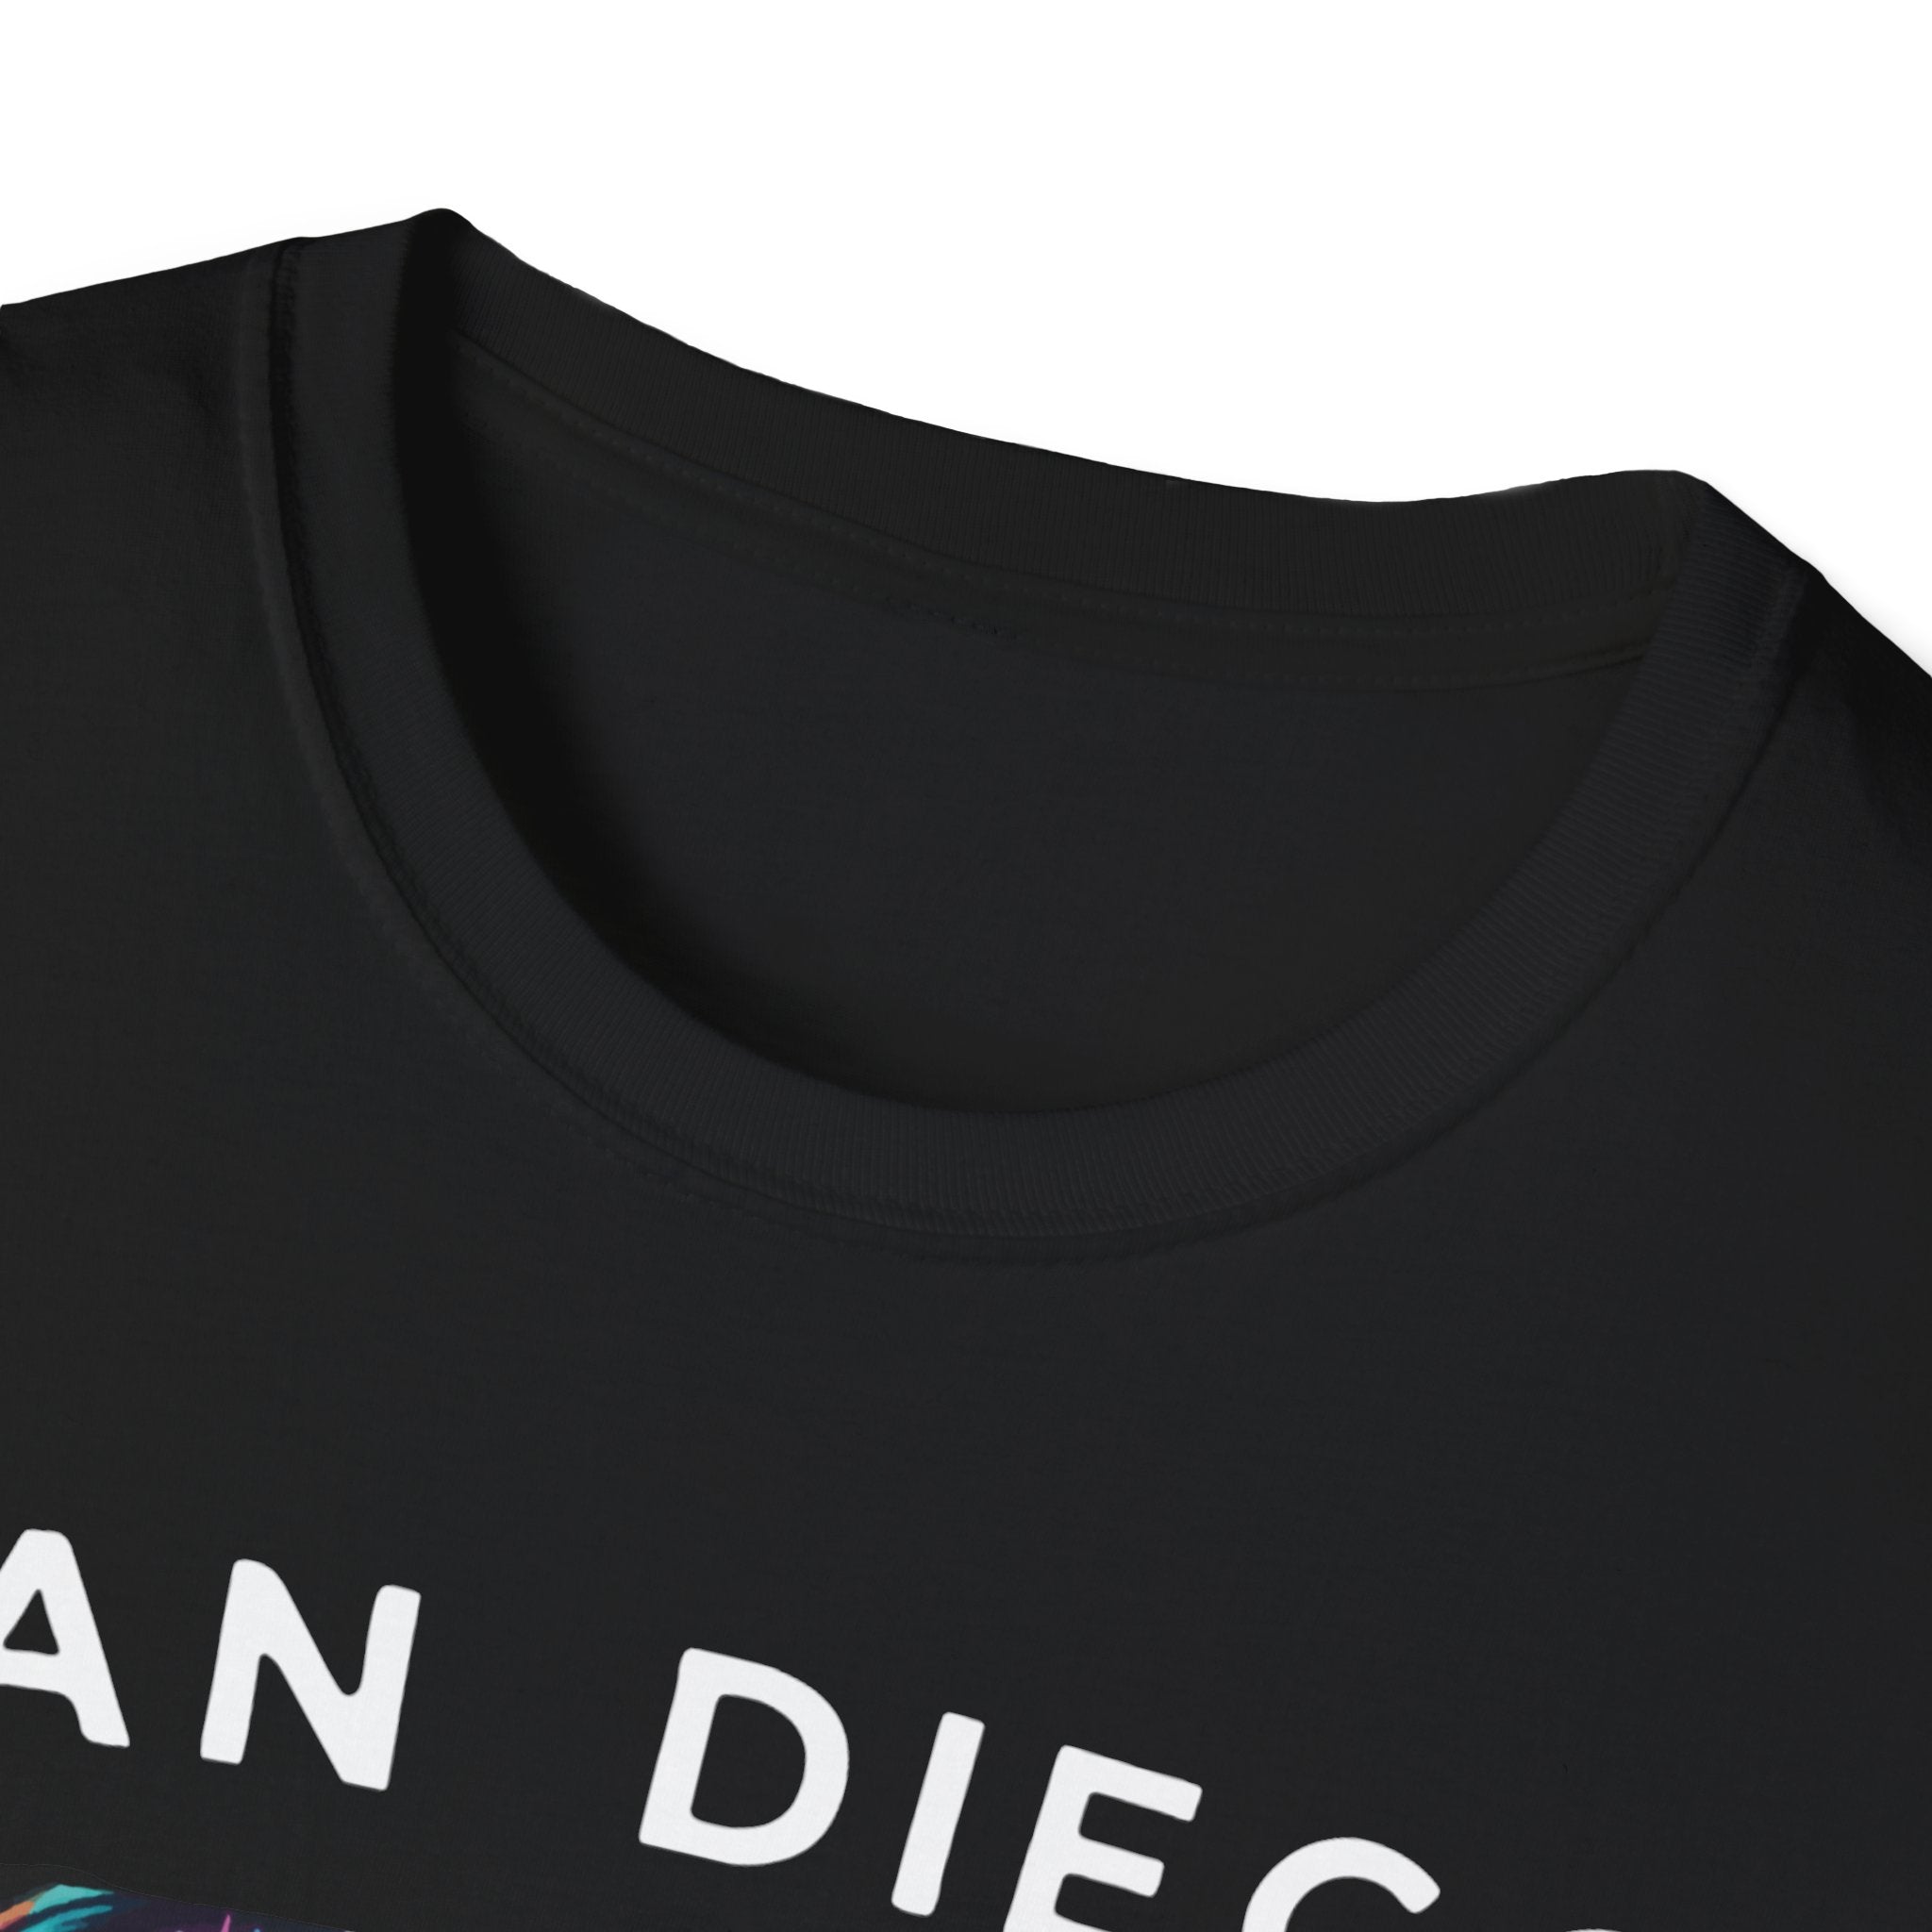 San Diego Space Surf Club T-Shirt